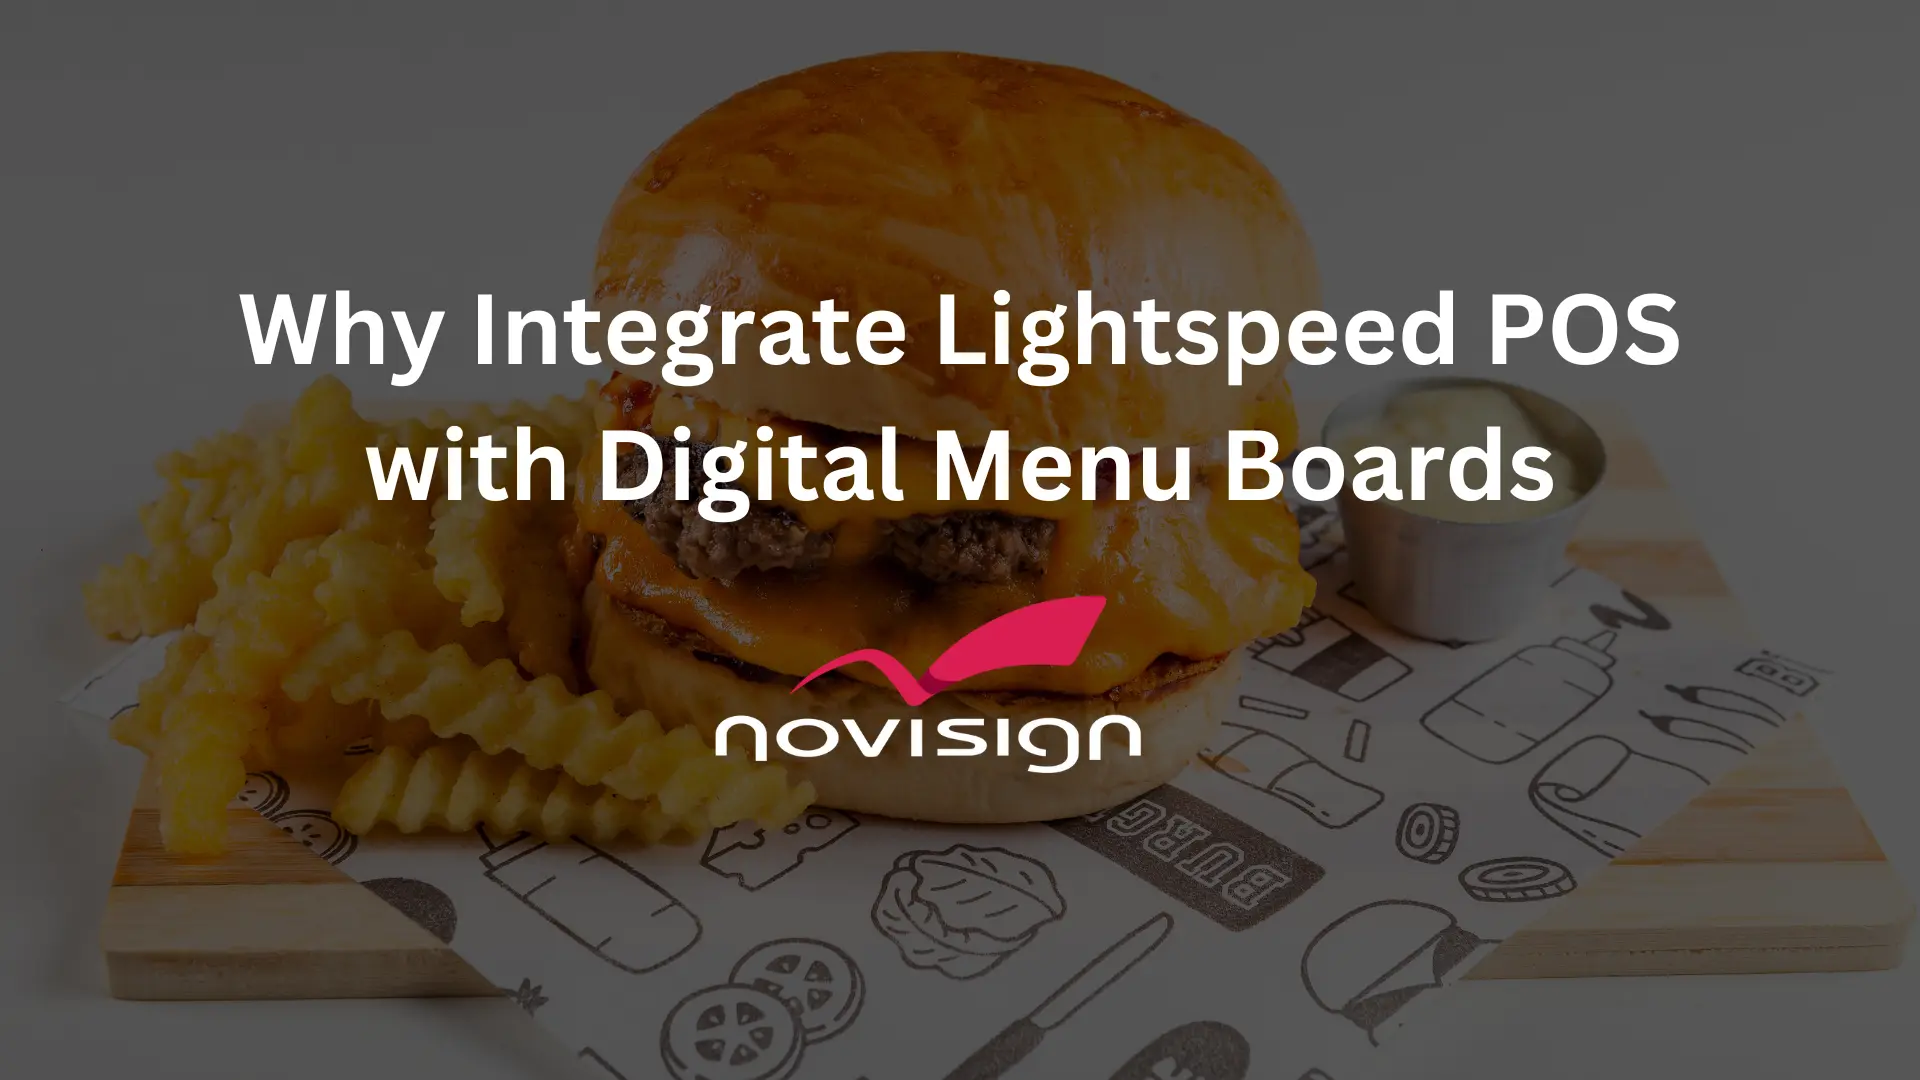 Lightspeed POS Digital Menu Boards